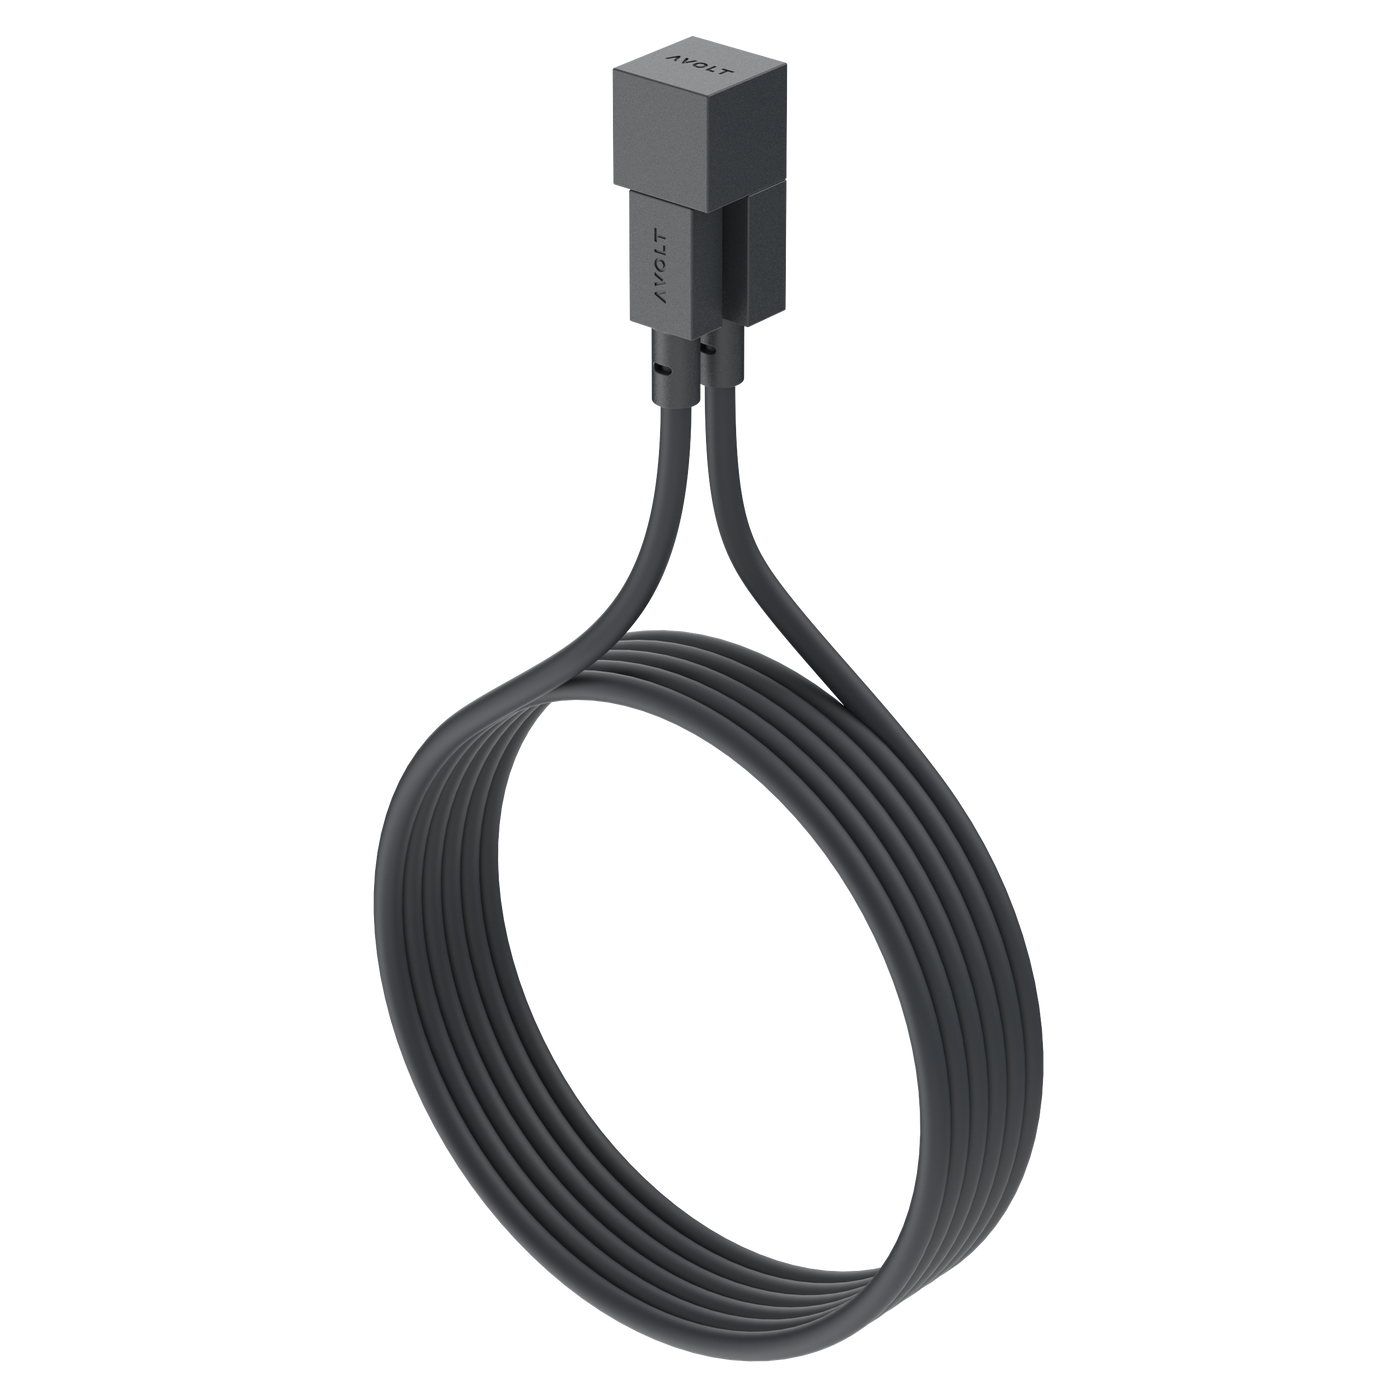 AVOLT Cable 1 Ladekabel